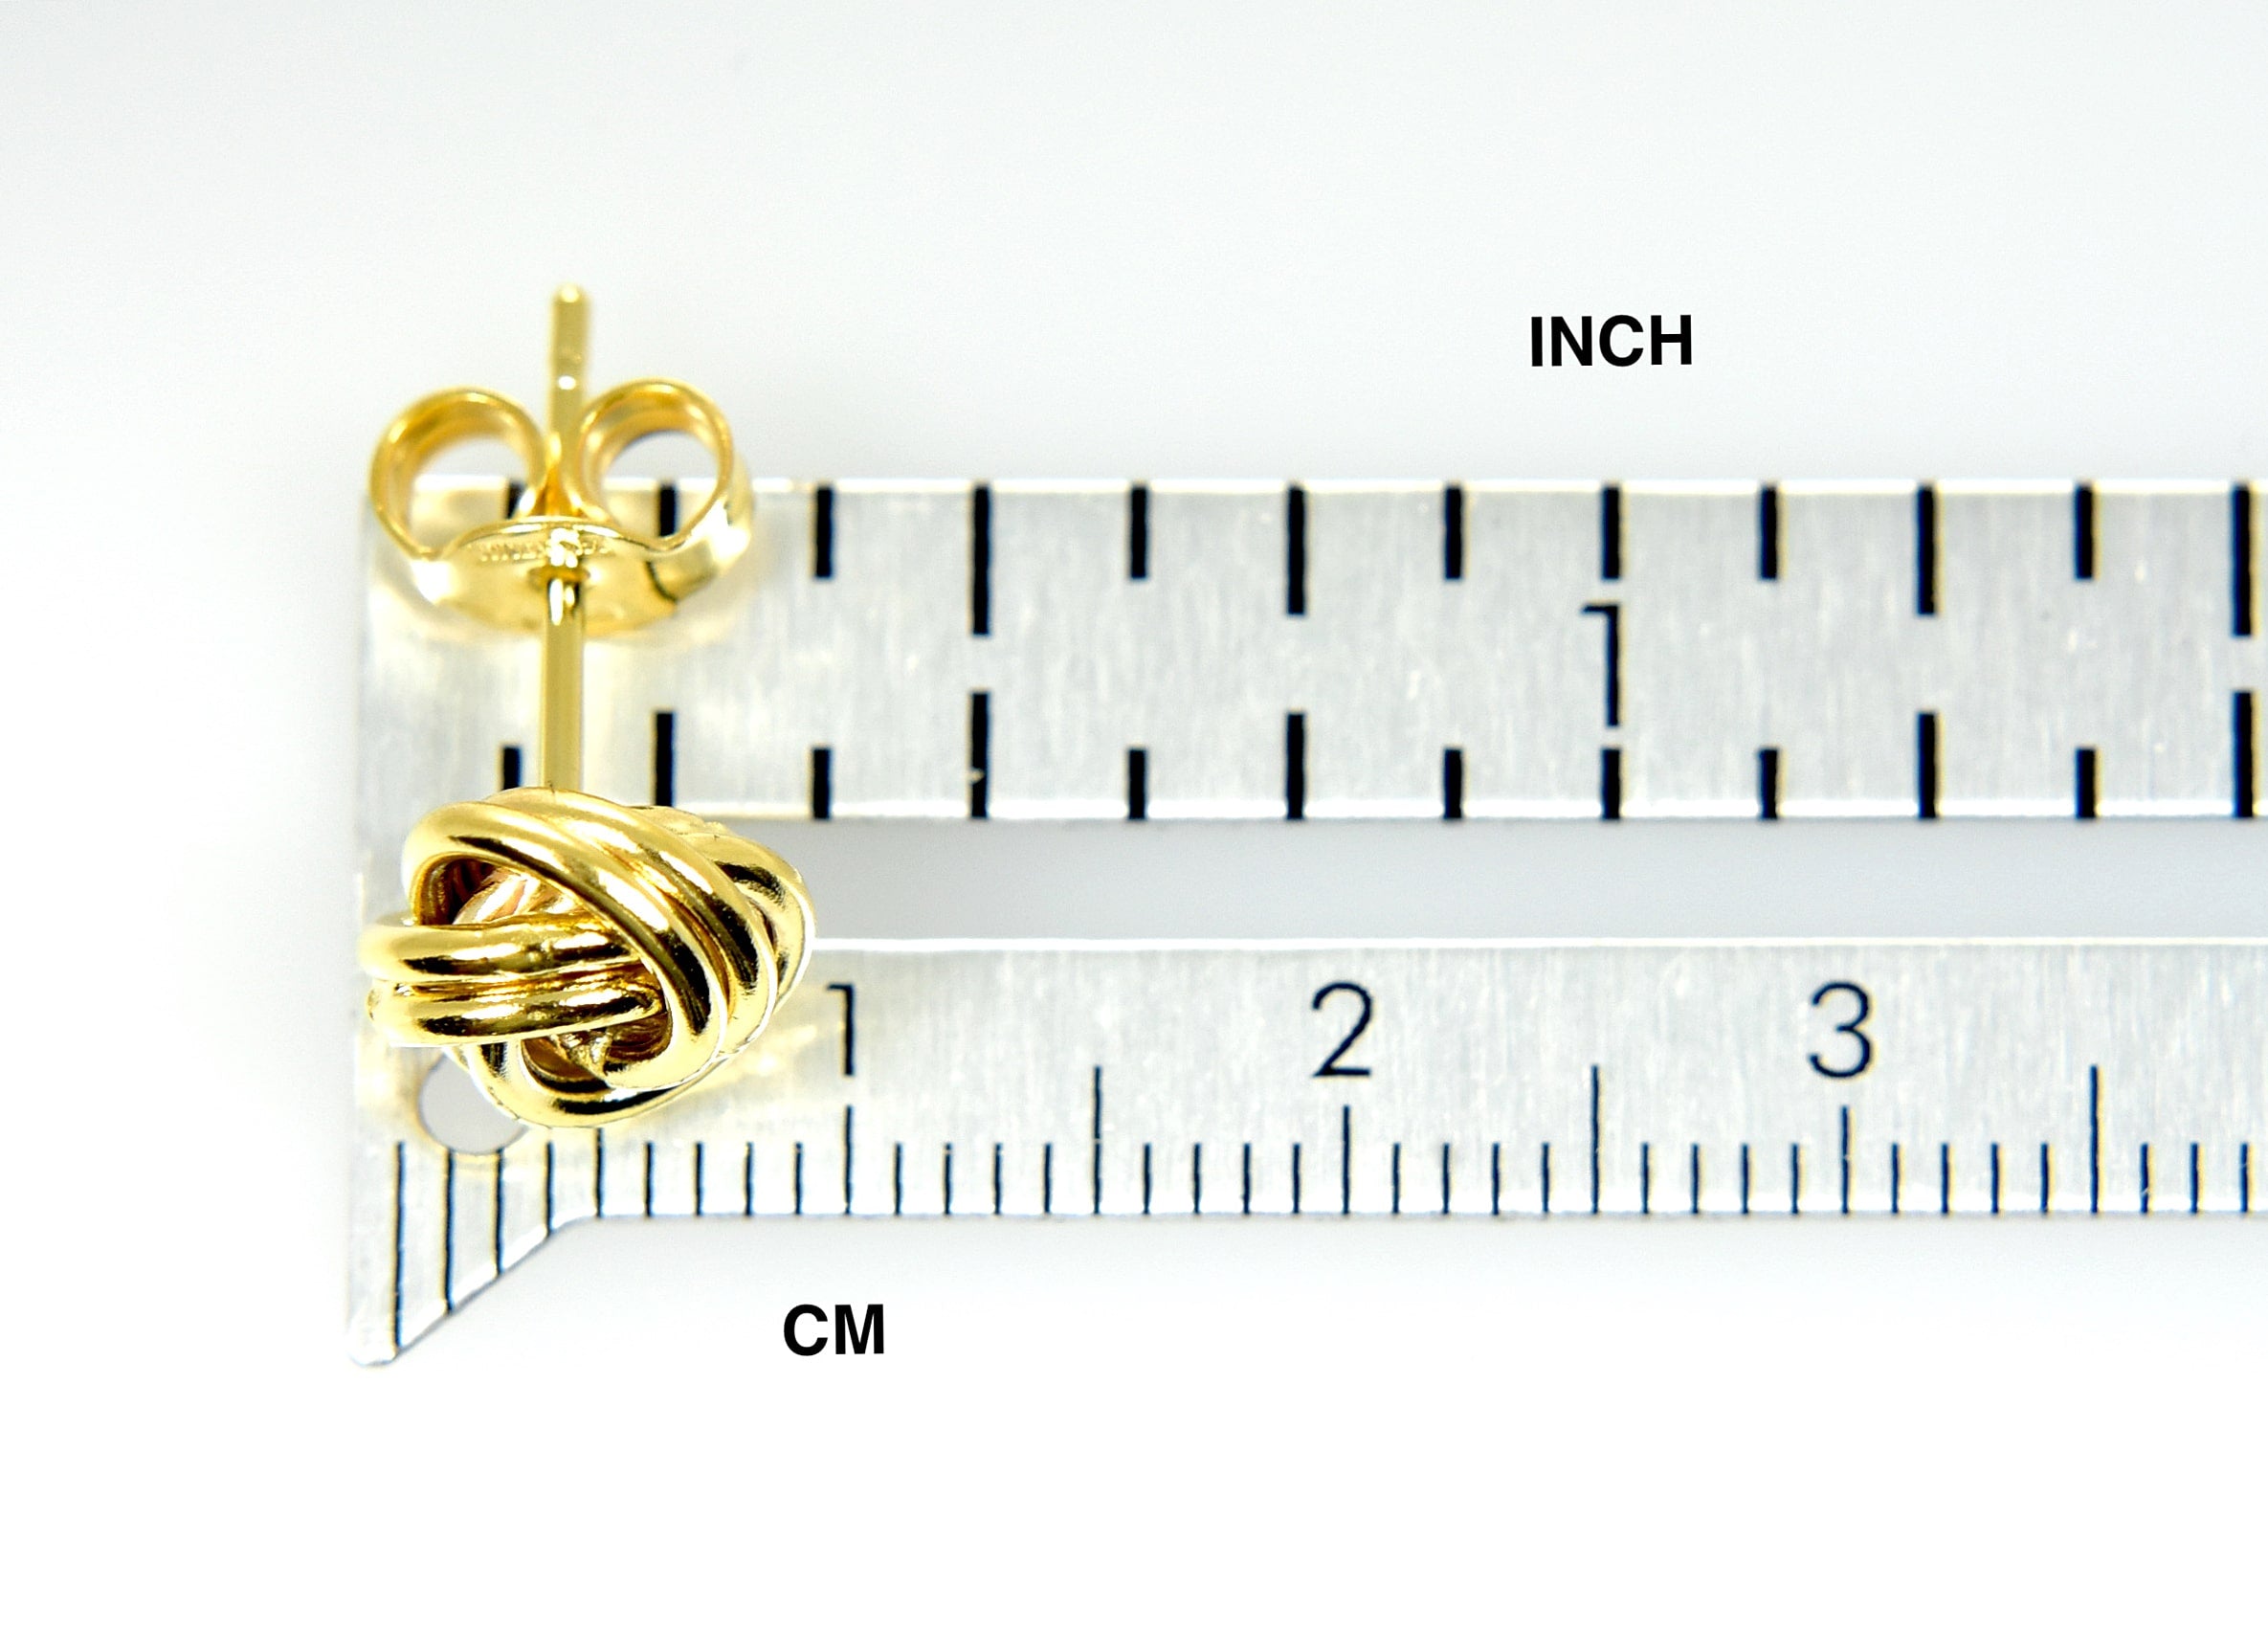 14k Yellow Gold 9mm Classic Love Knot Post Earrings CKLTL1123